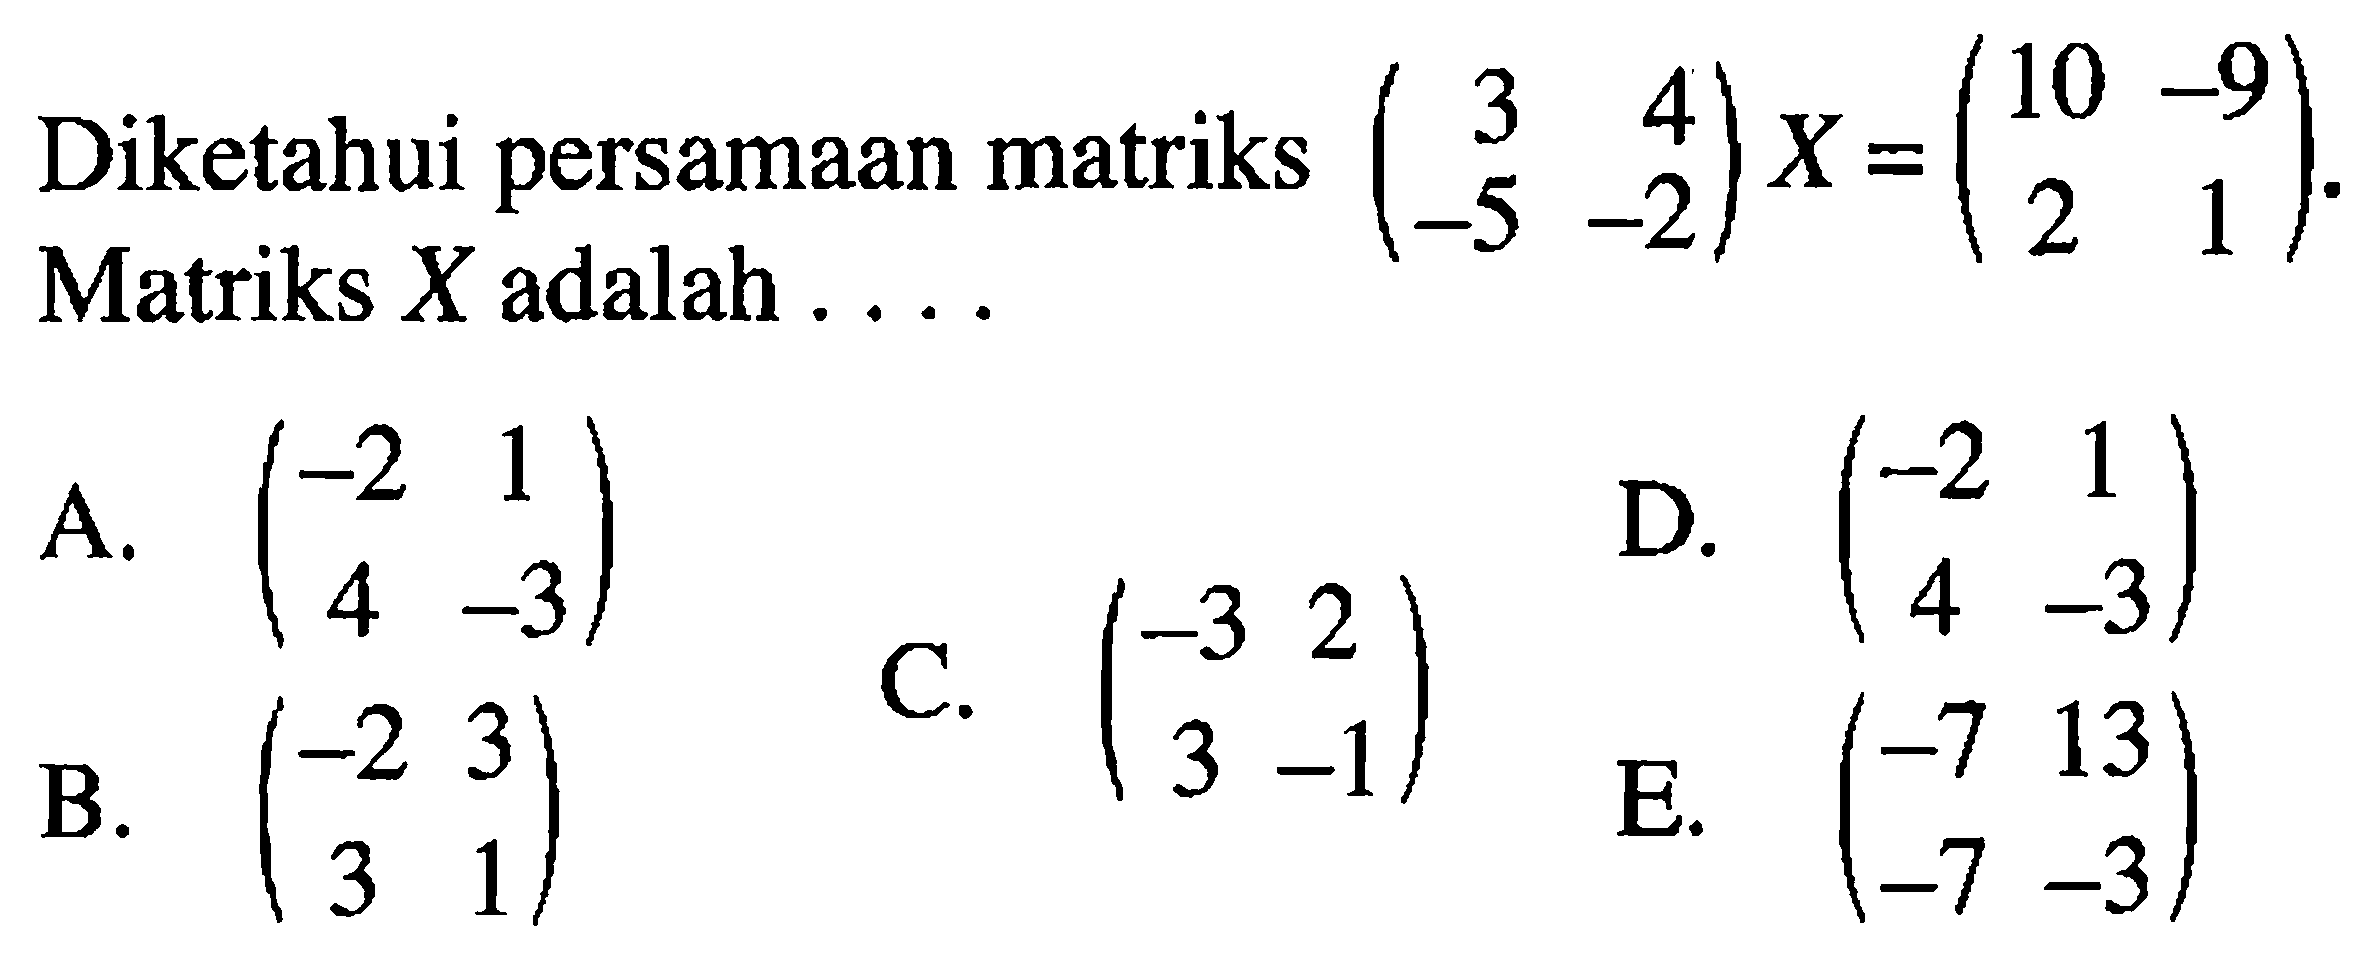 Diketahui persamaan matriks (3 4 -5 -2)X=(10 -9 2 1). Matriks X adalah....